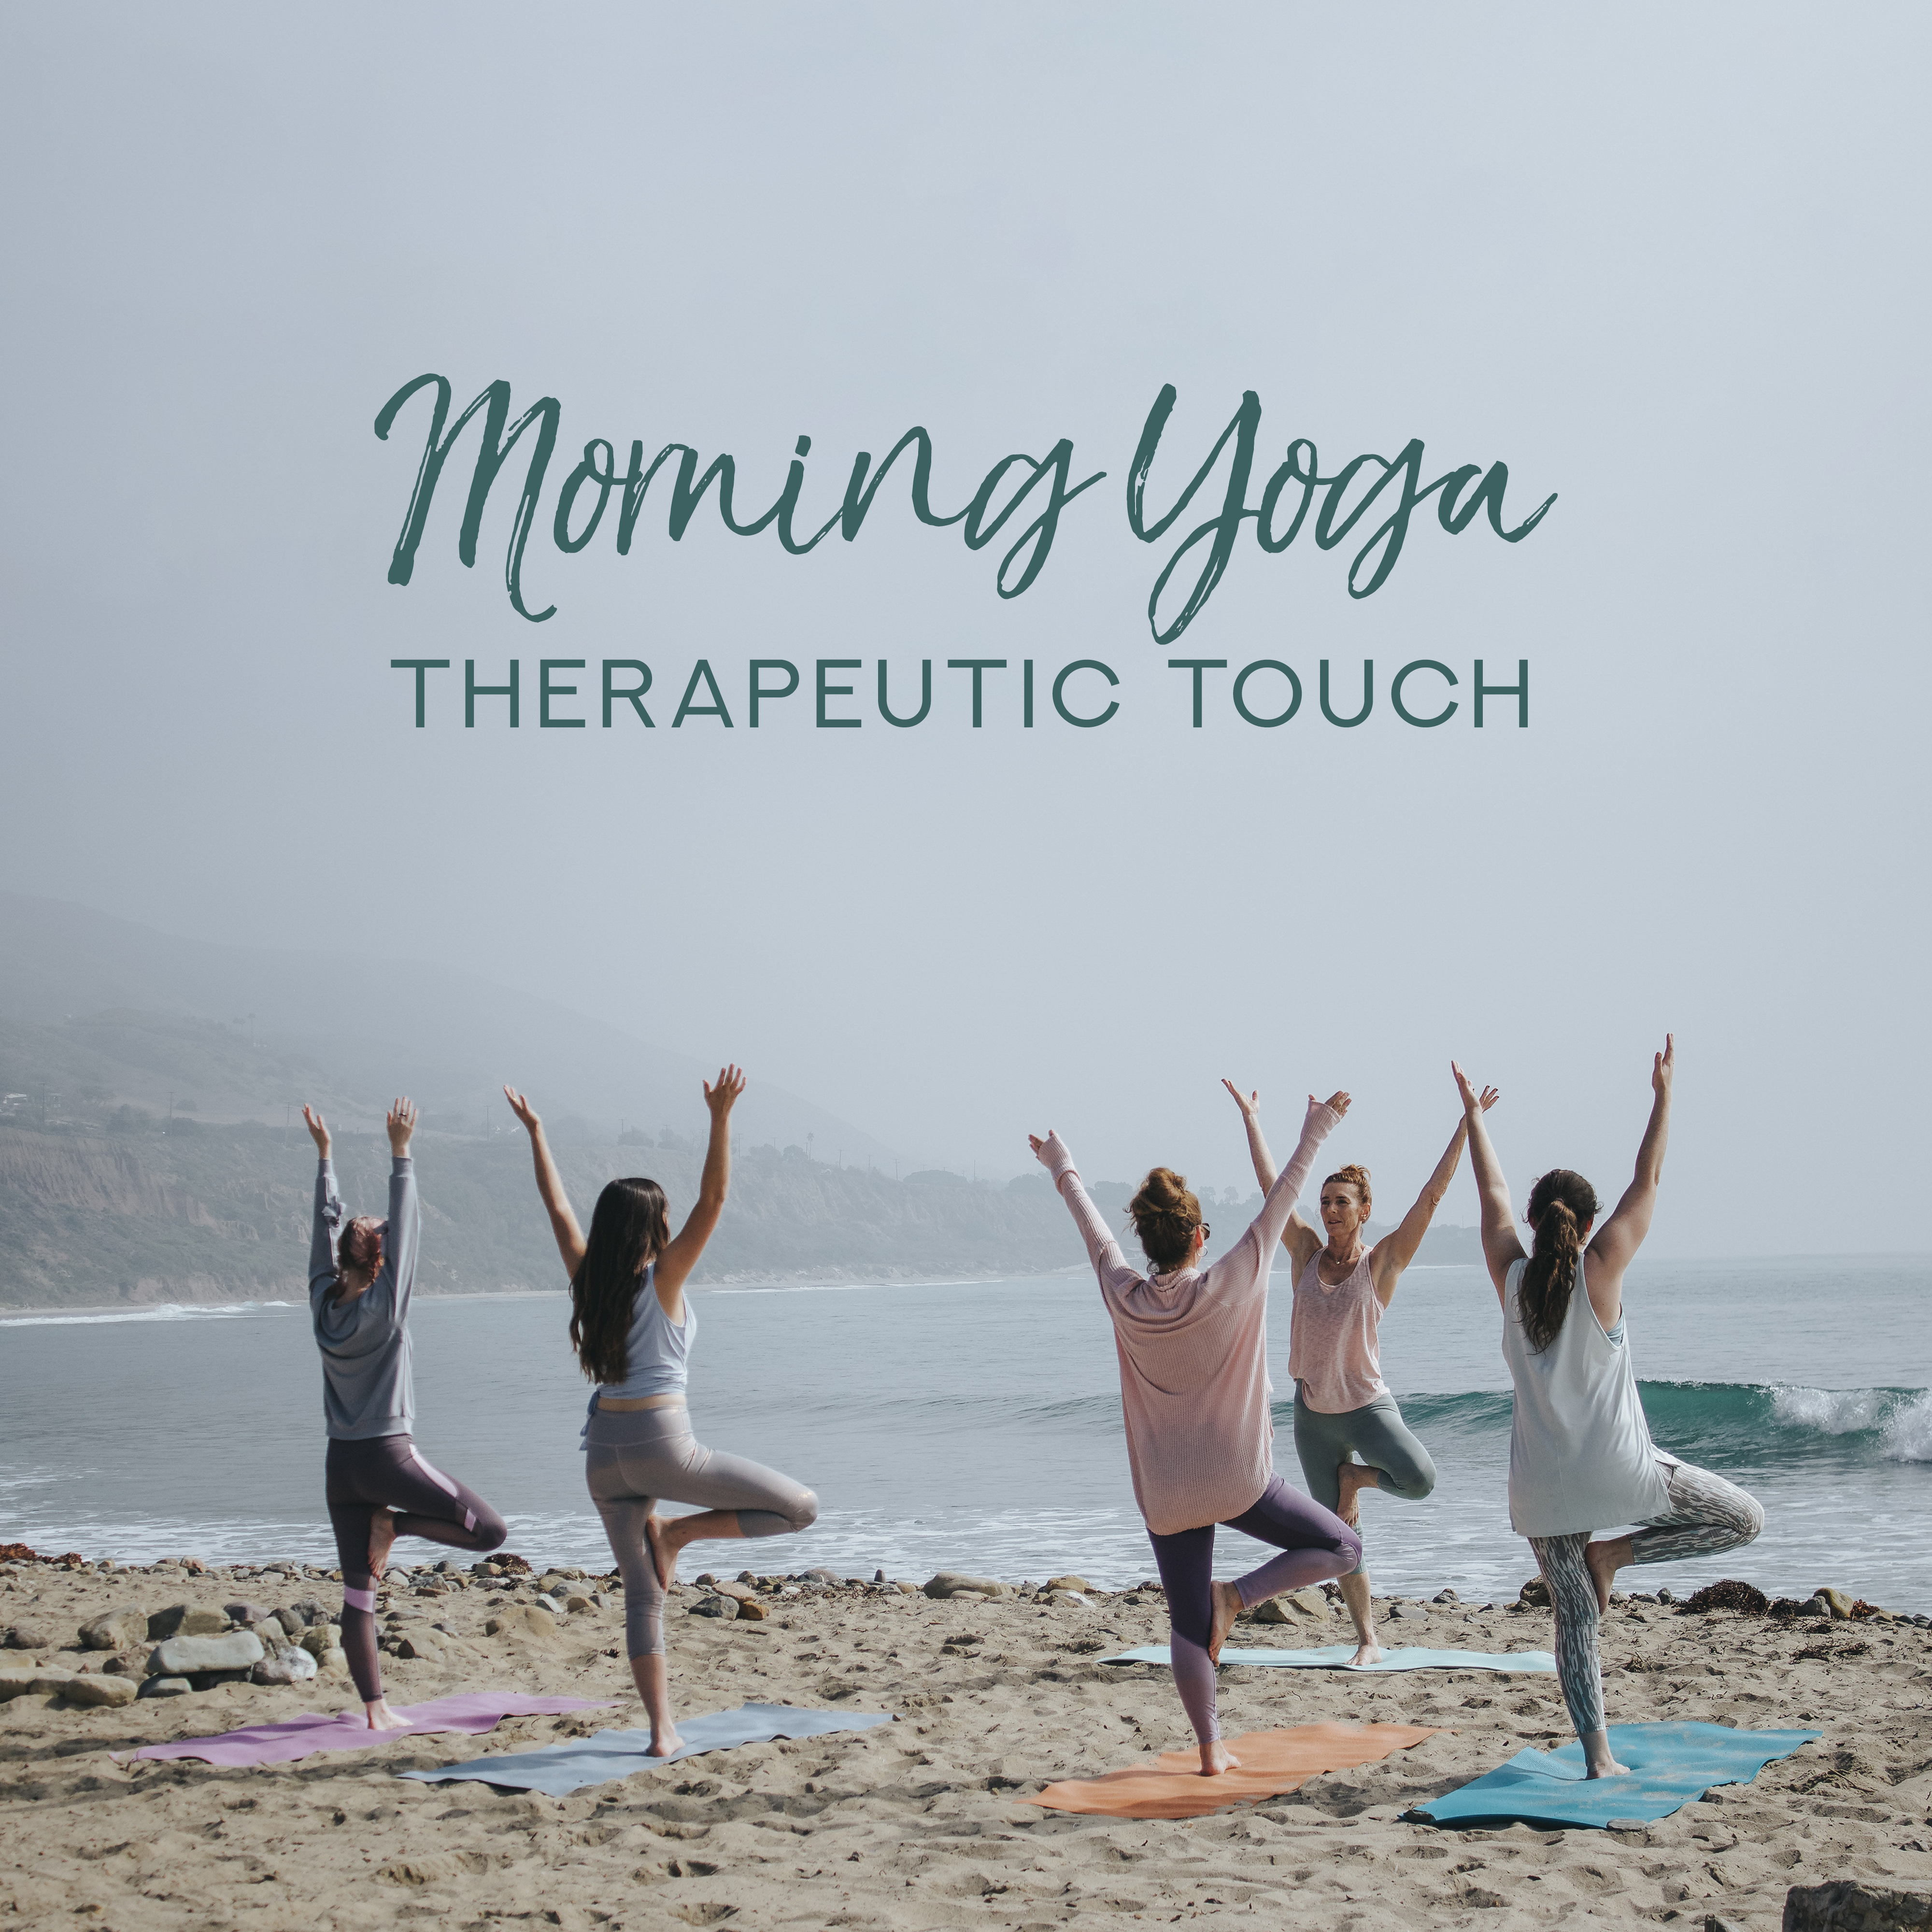 Morning Yoga Therapeutic Touch  New Age Music to Spiritual Journey, Reiki Training, Deep Meditation, Chakra Healing